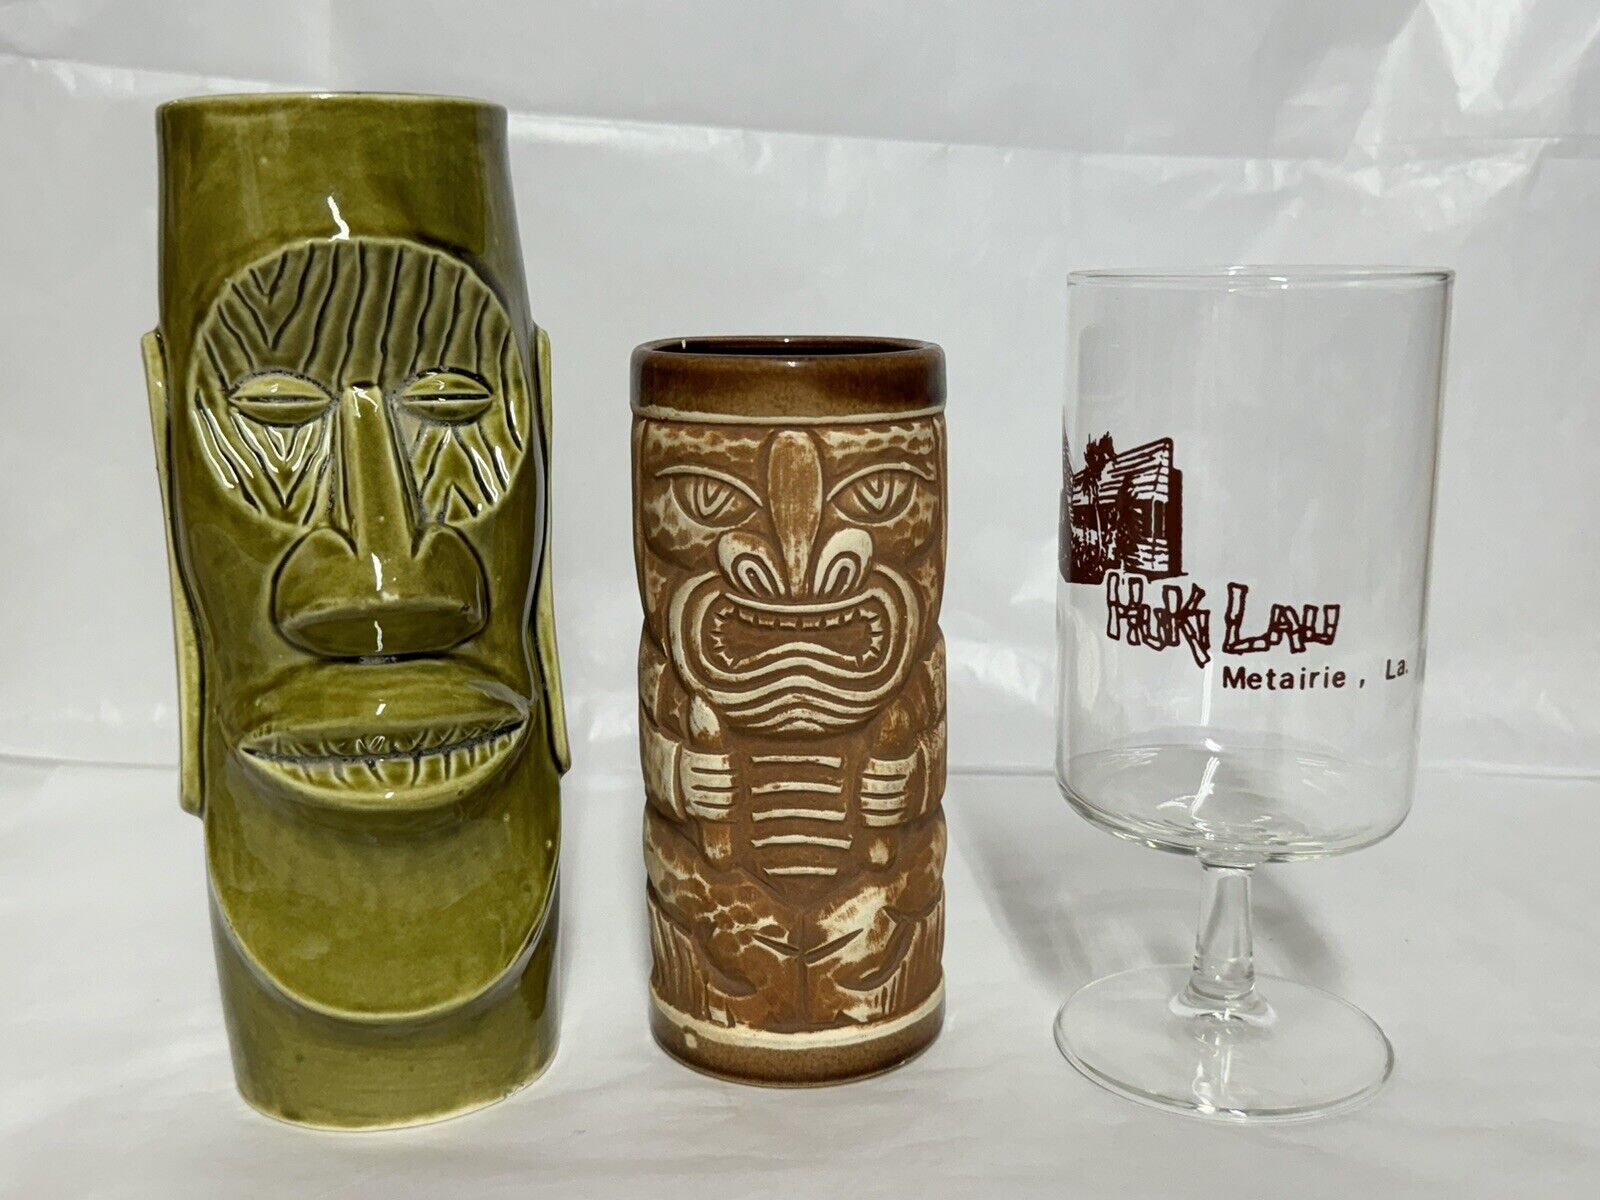 LOT-3 Vintage Huki Lau Metairie, La Bar Mug-Cups & Cocktail Glass New Orleans